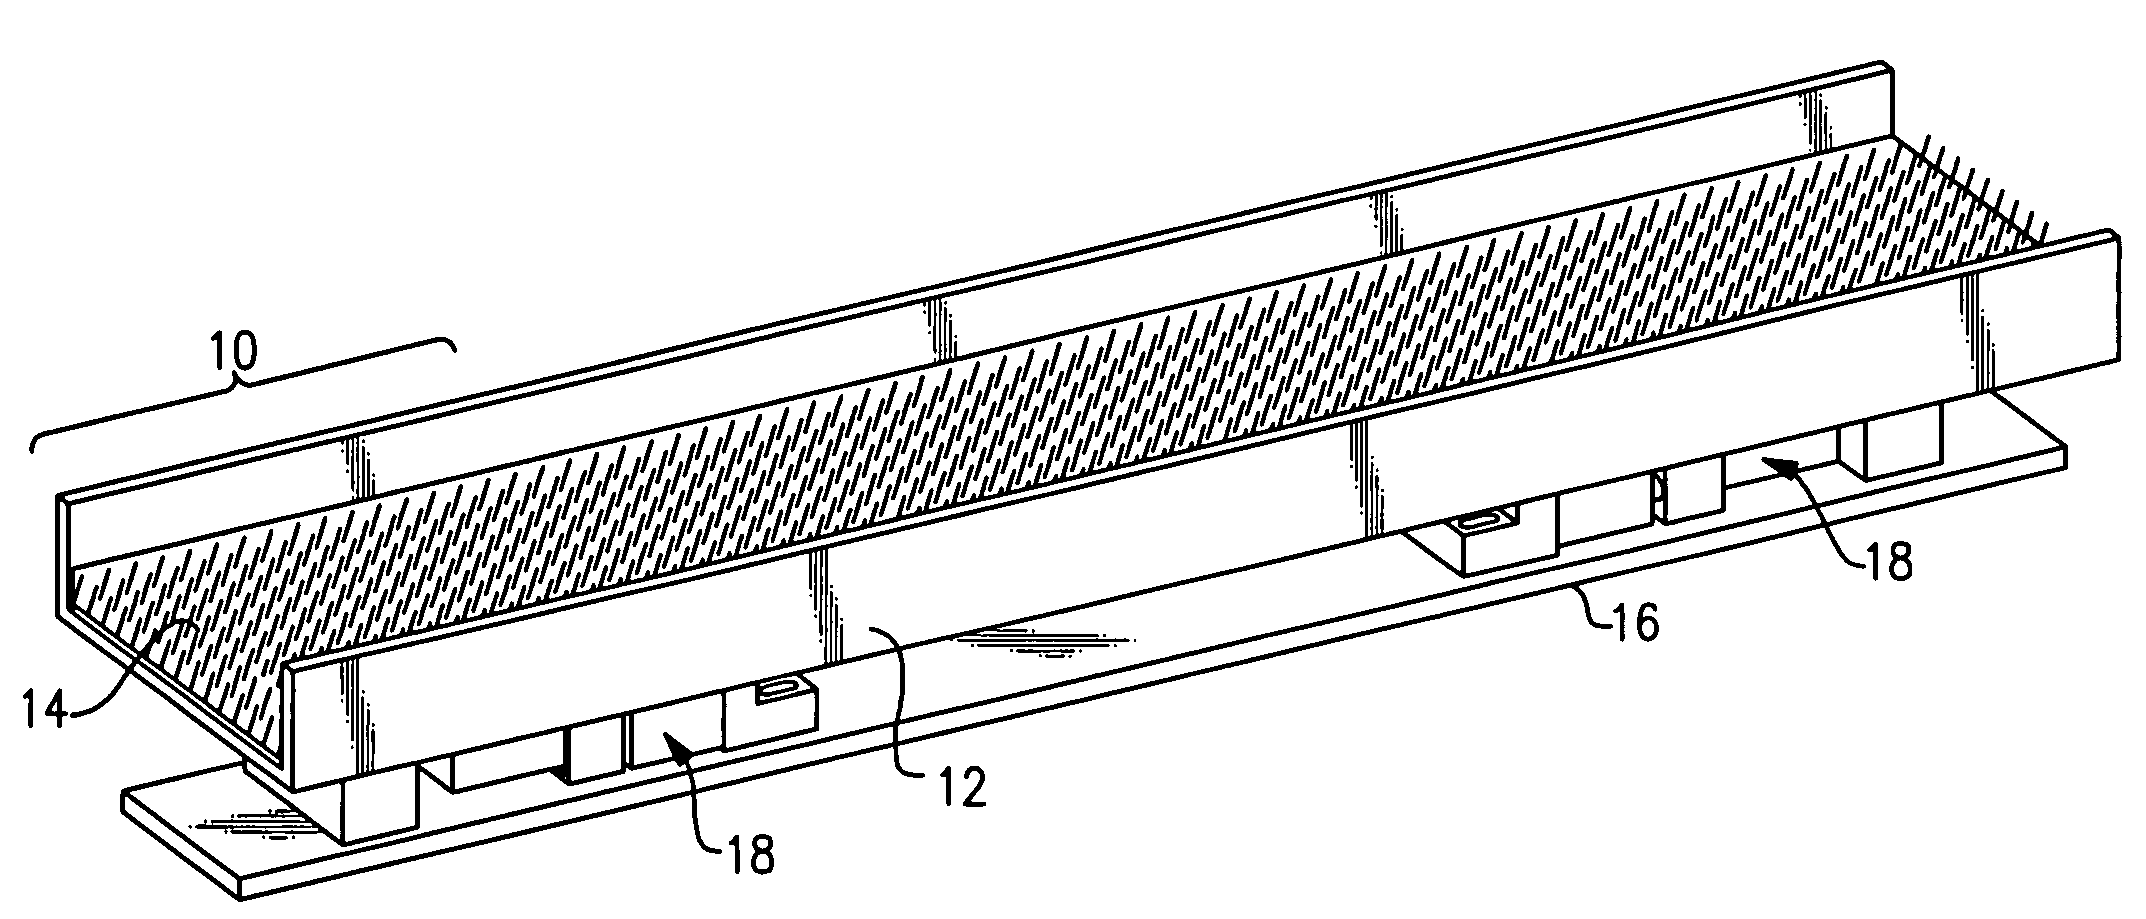 Vibratory conveyor with non-biased oscillation